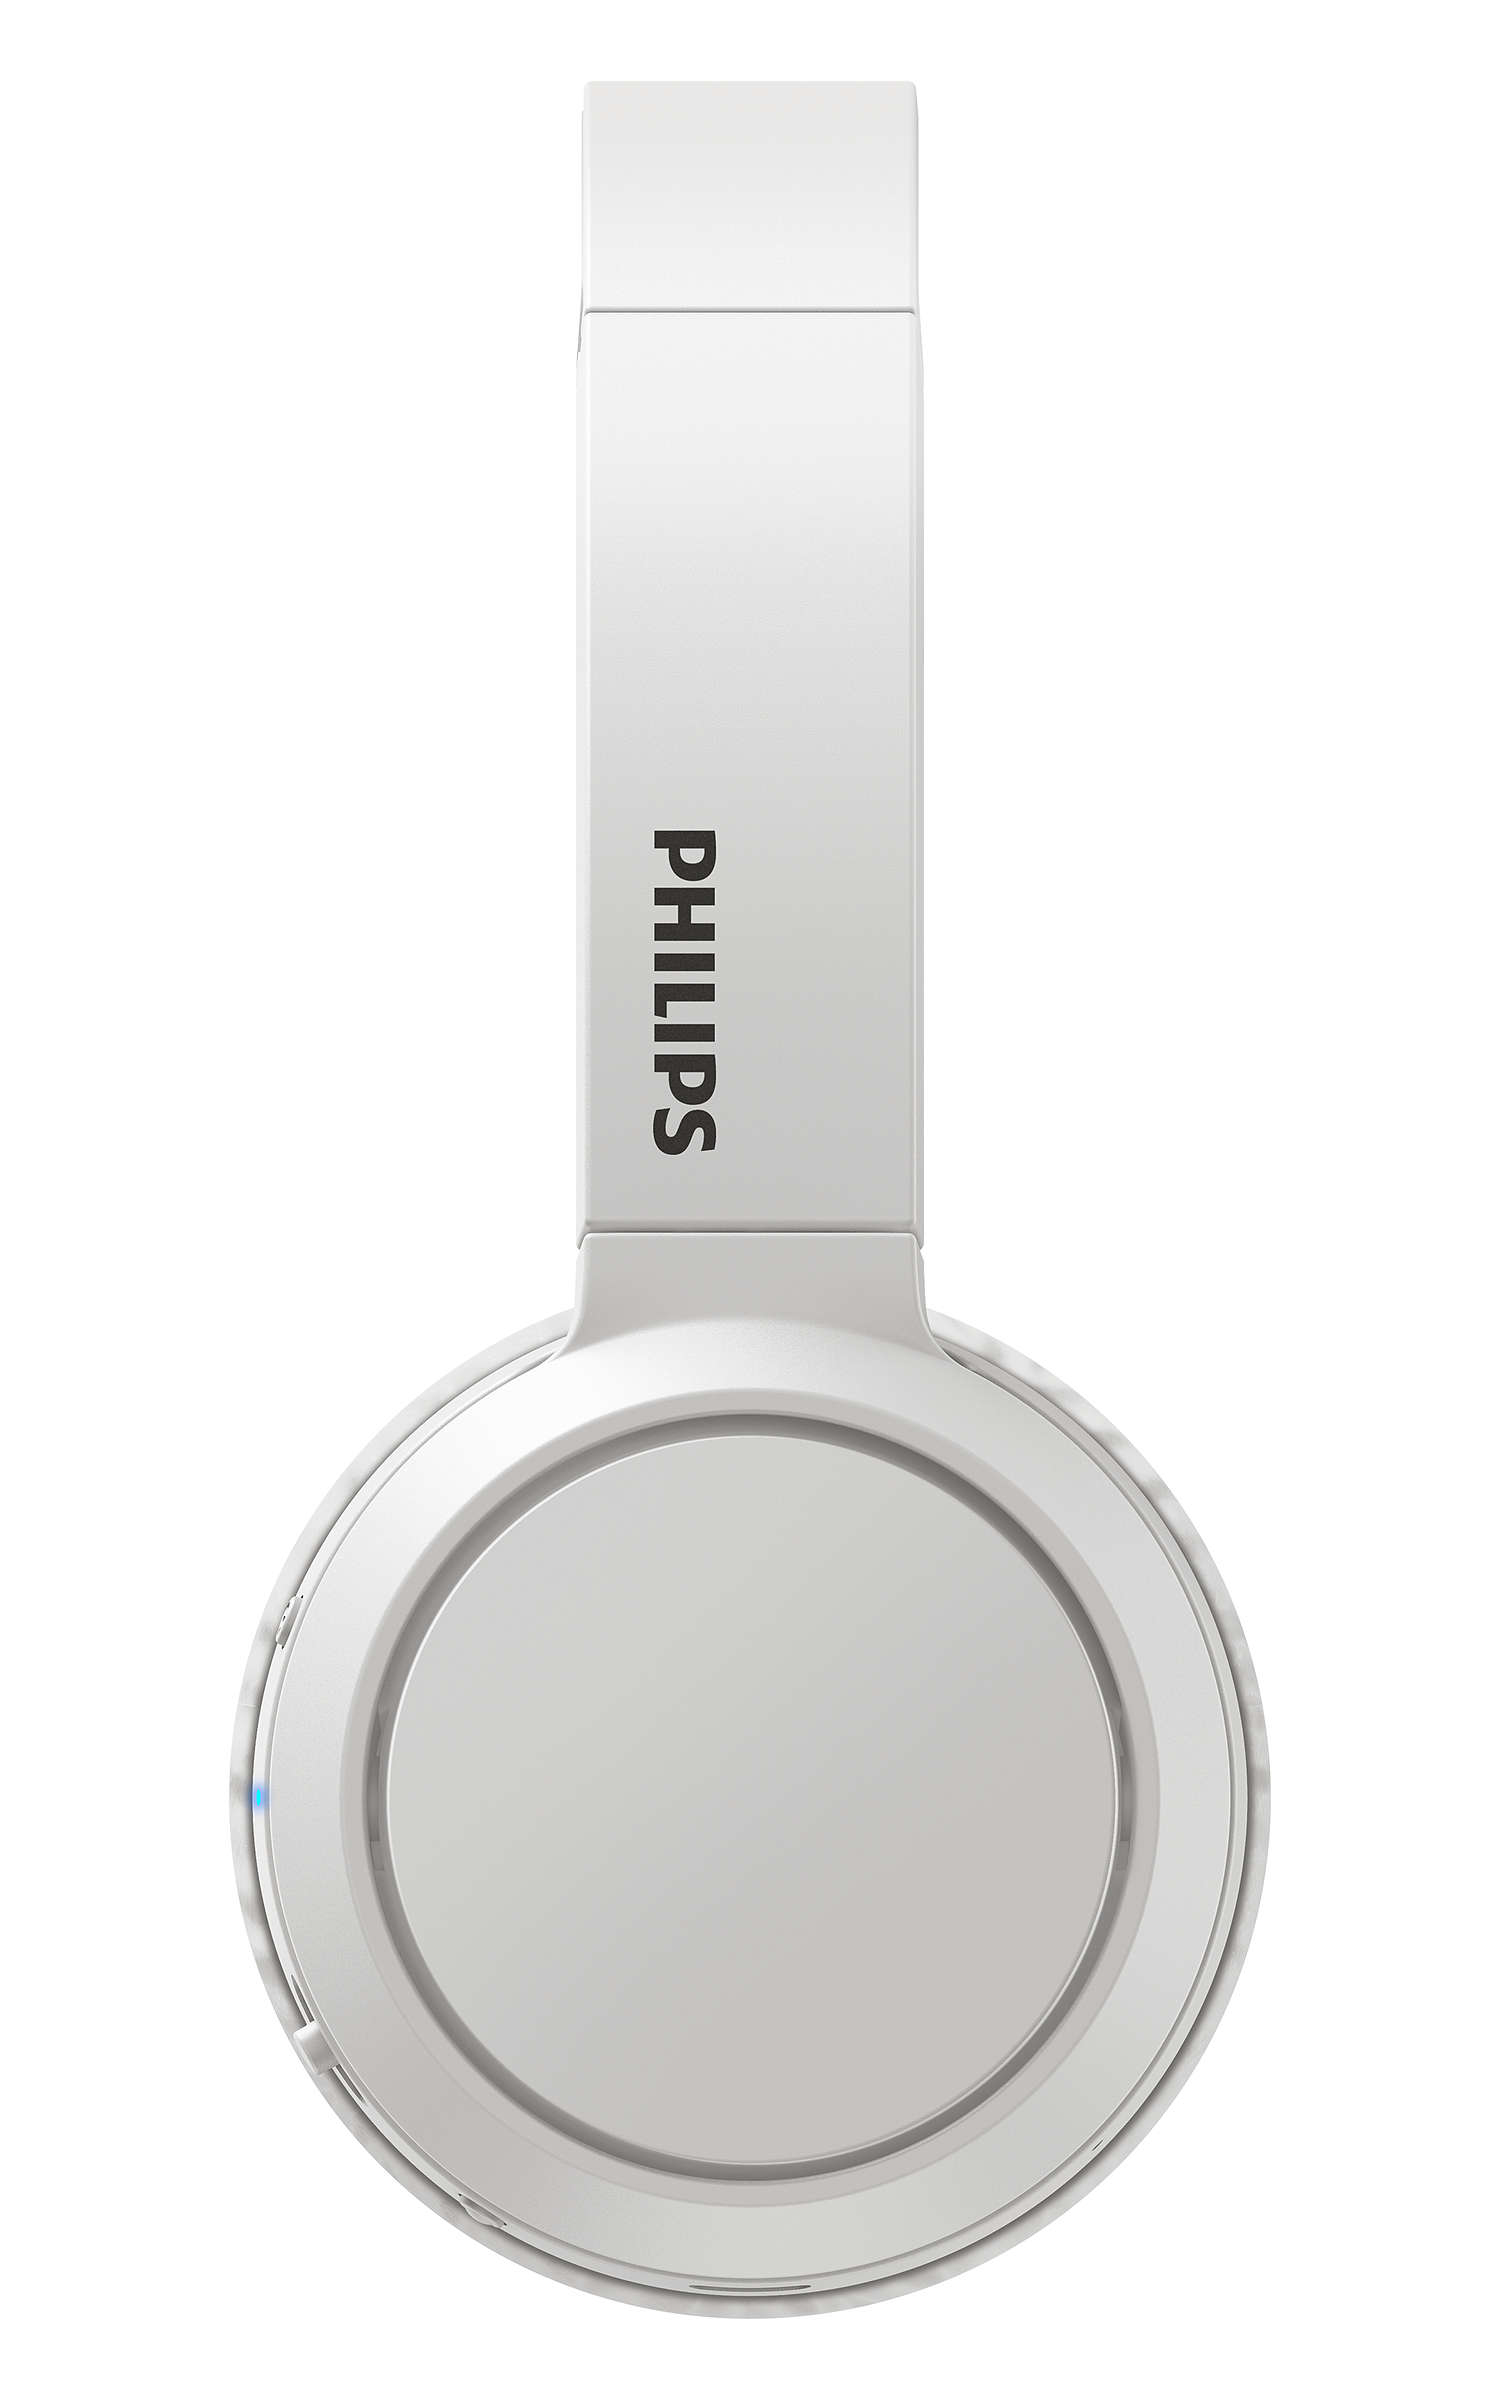 On-ear Kopfhörer Weiß H4205WT/00, Bluetooth PHILIPS